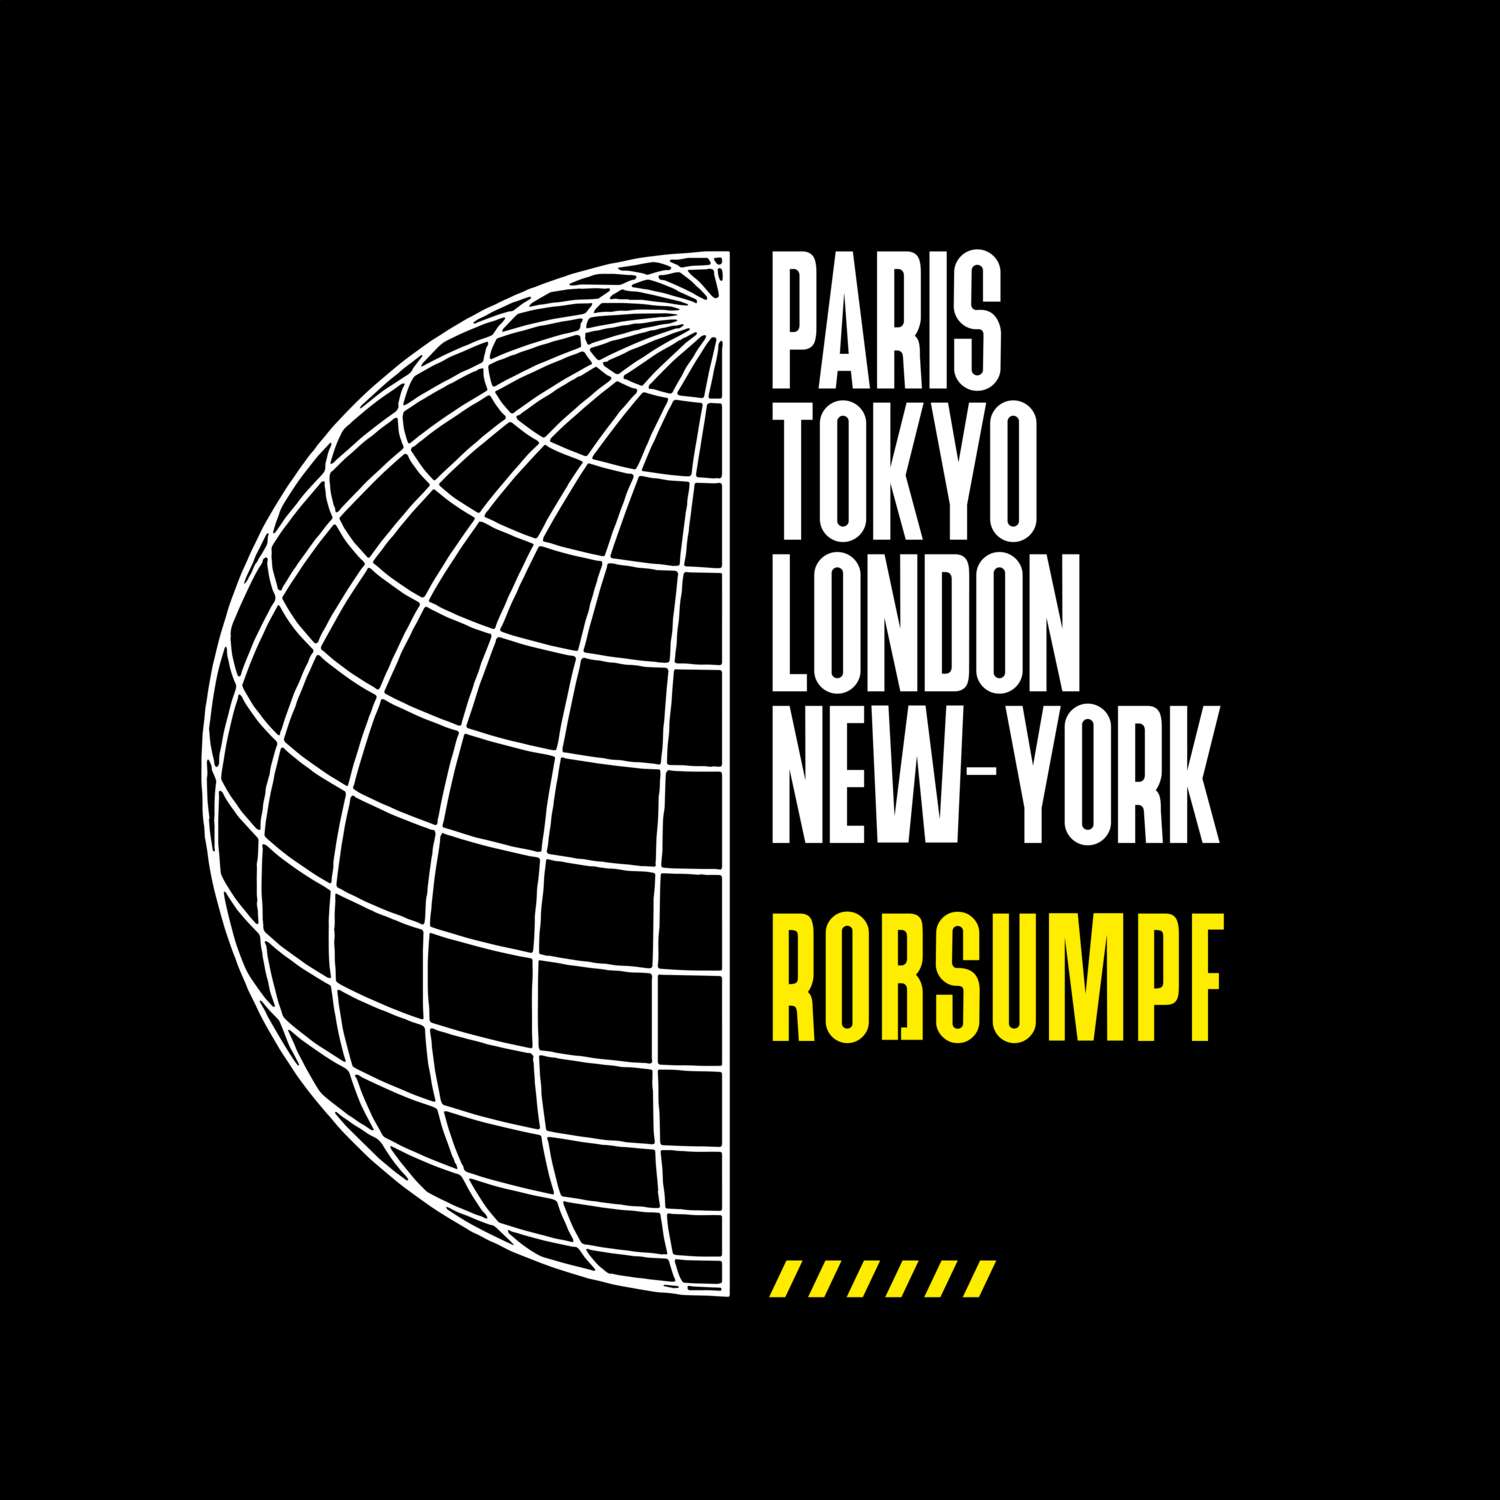 Roßsumpf T-Shirt »Paris Tokyo London«